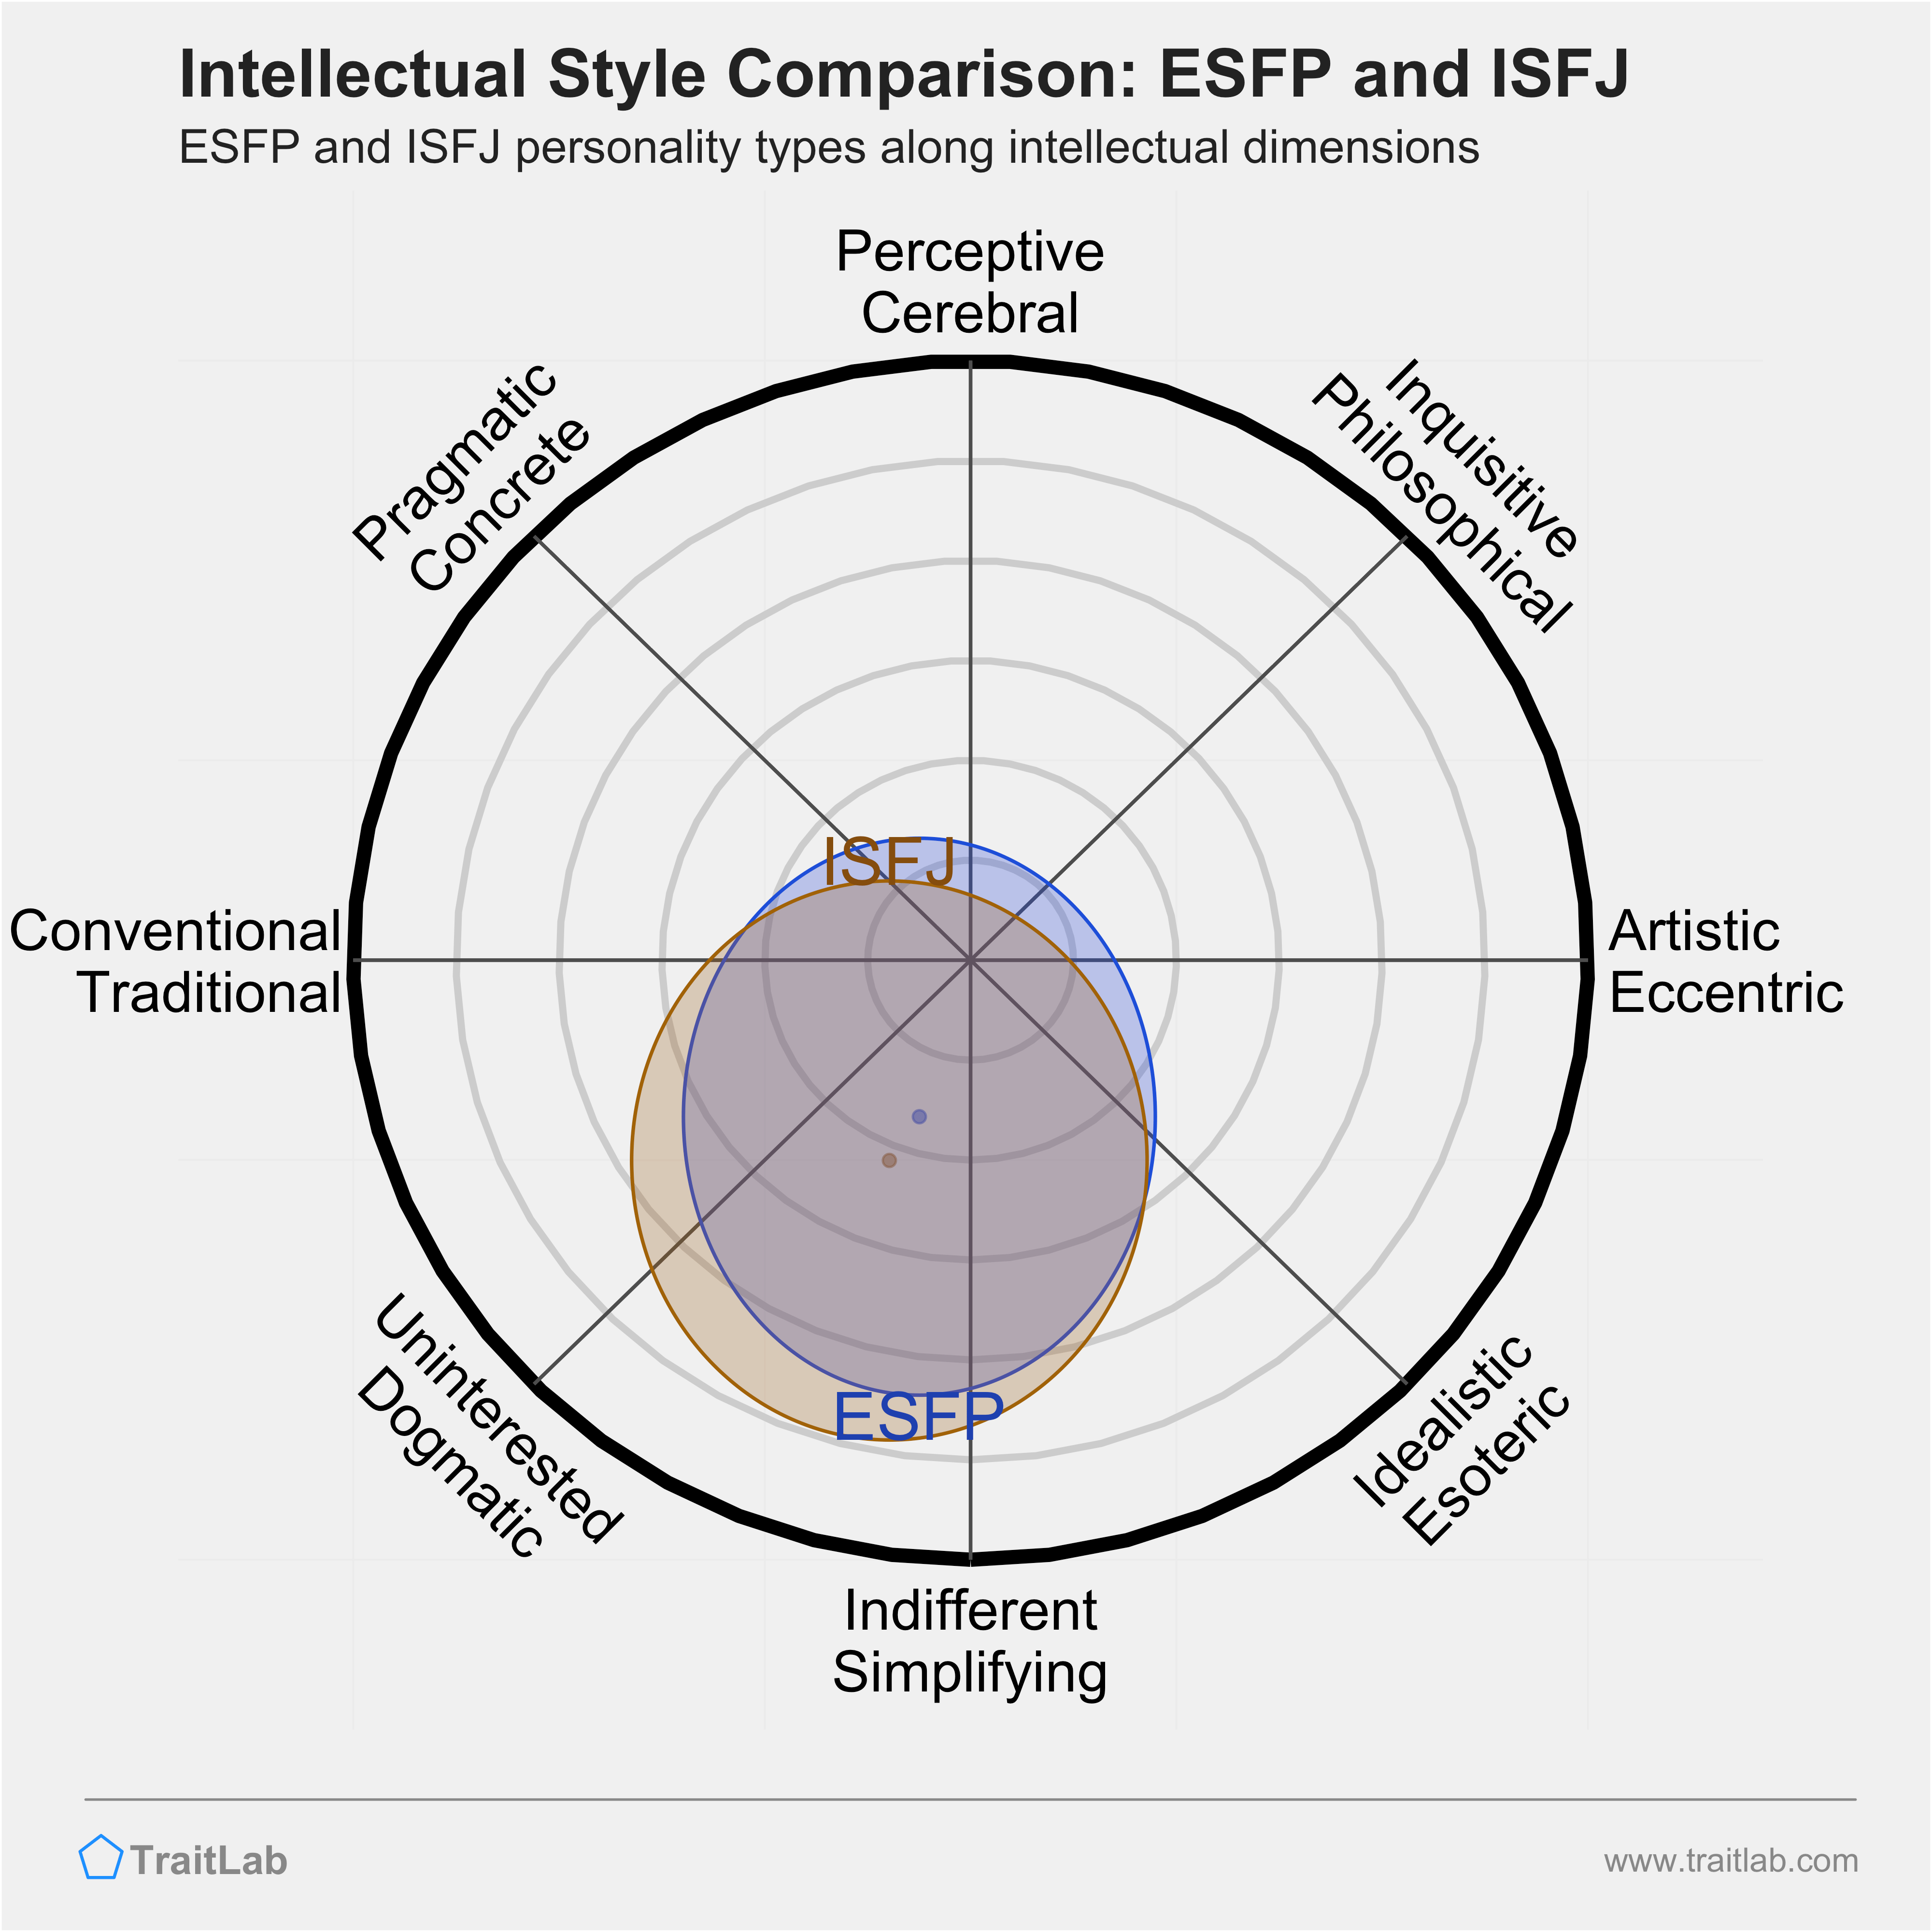 ESFP and ISFJ comparison across intellectual dimensions